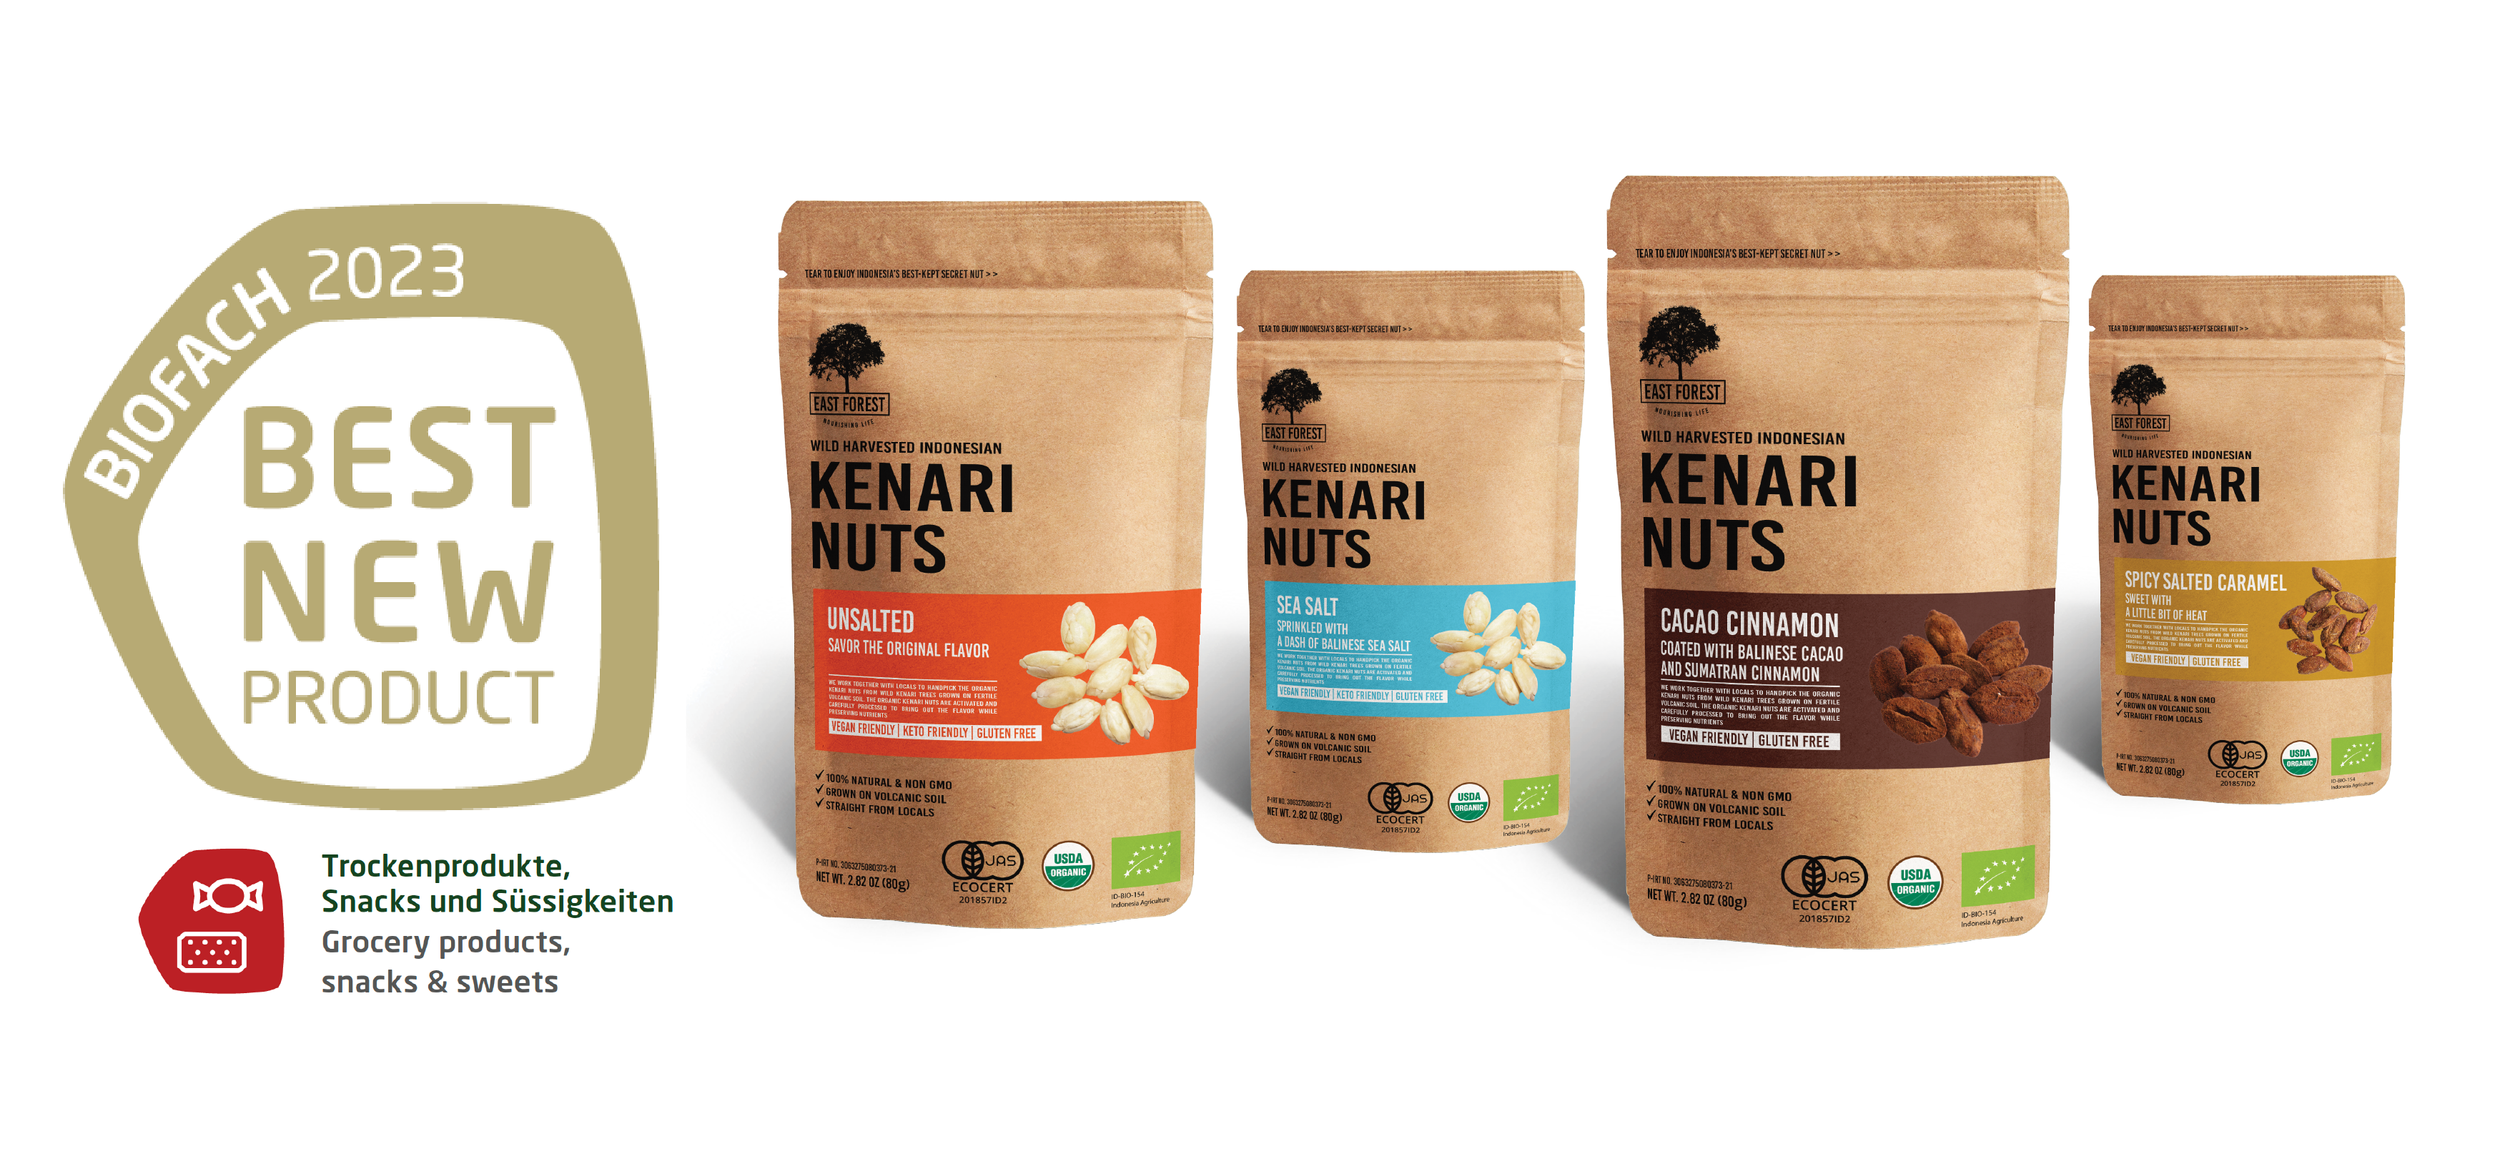 East Forest Kenari Nuts Kenari Nuss - Biofach Best New Product 2023 1.png